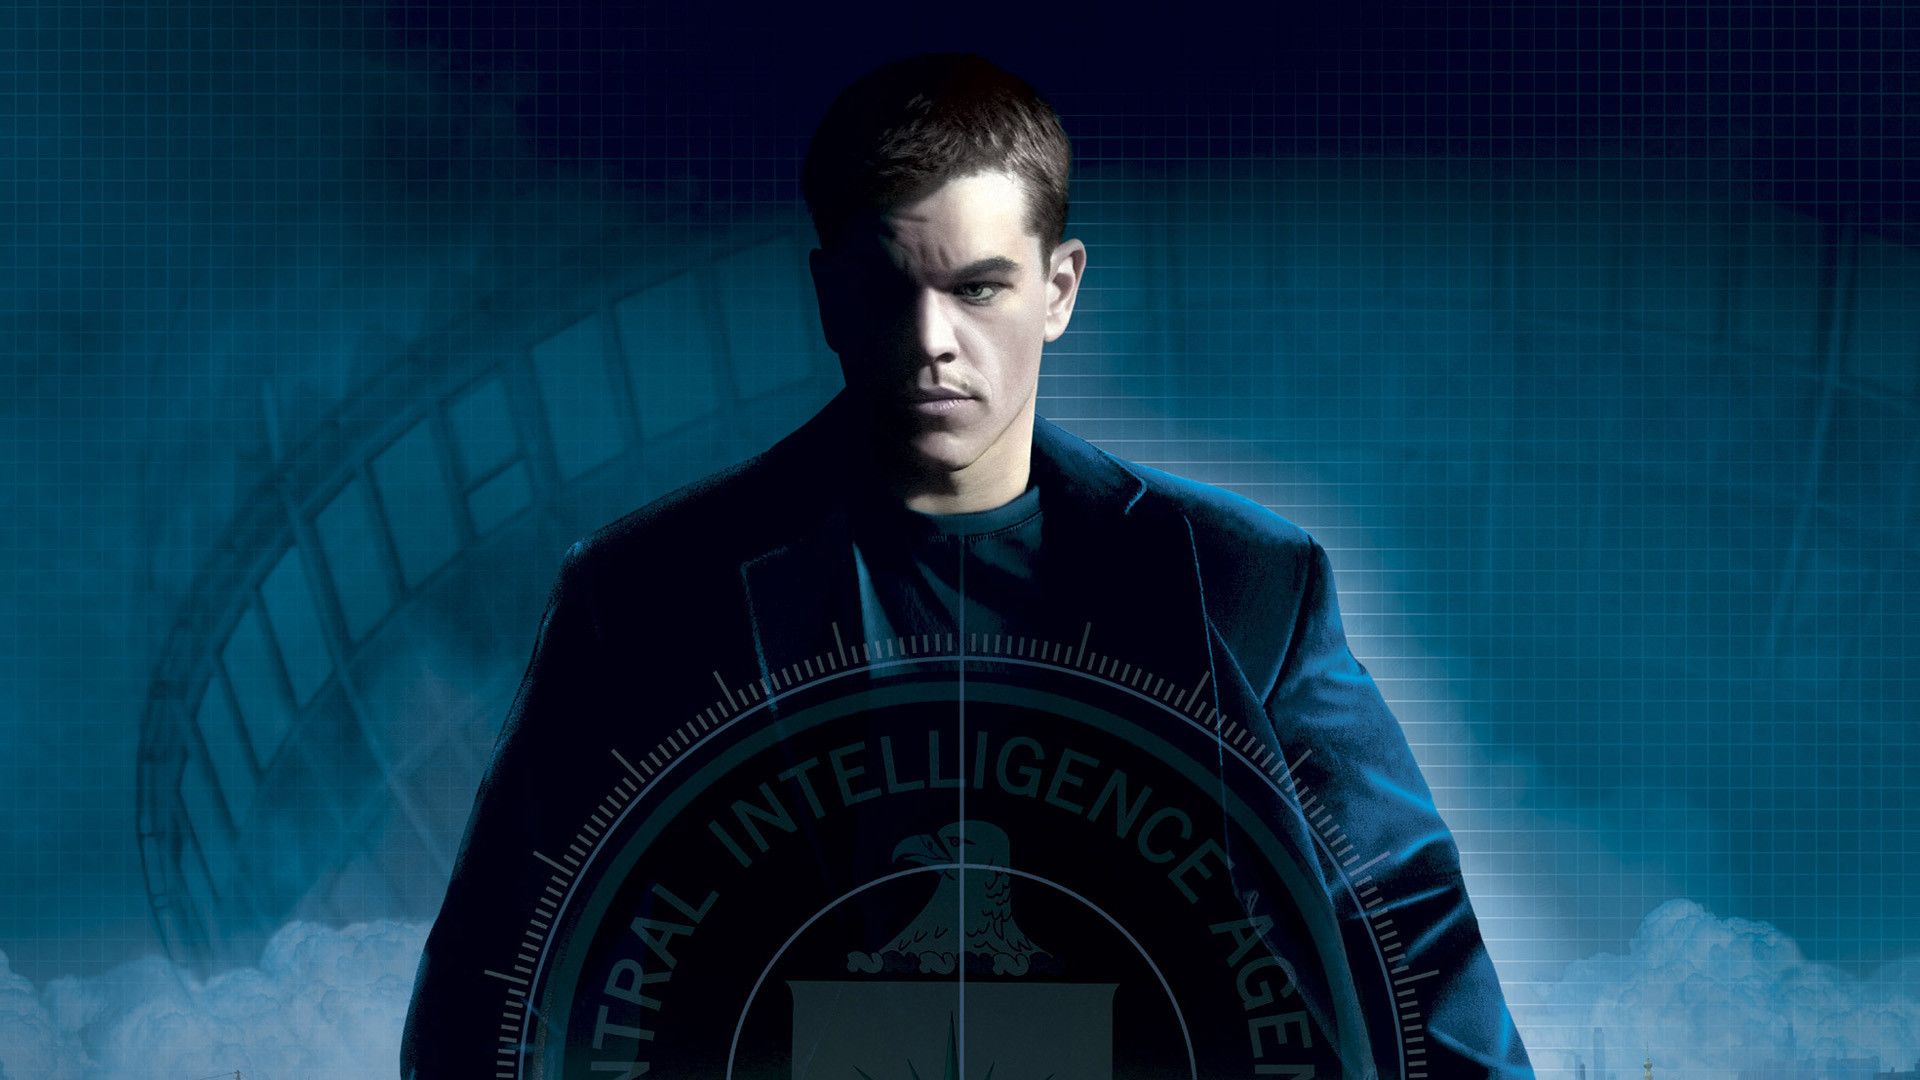 The Bourne Supremacy background